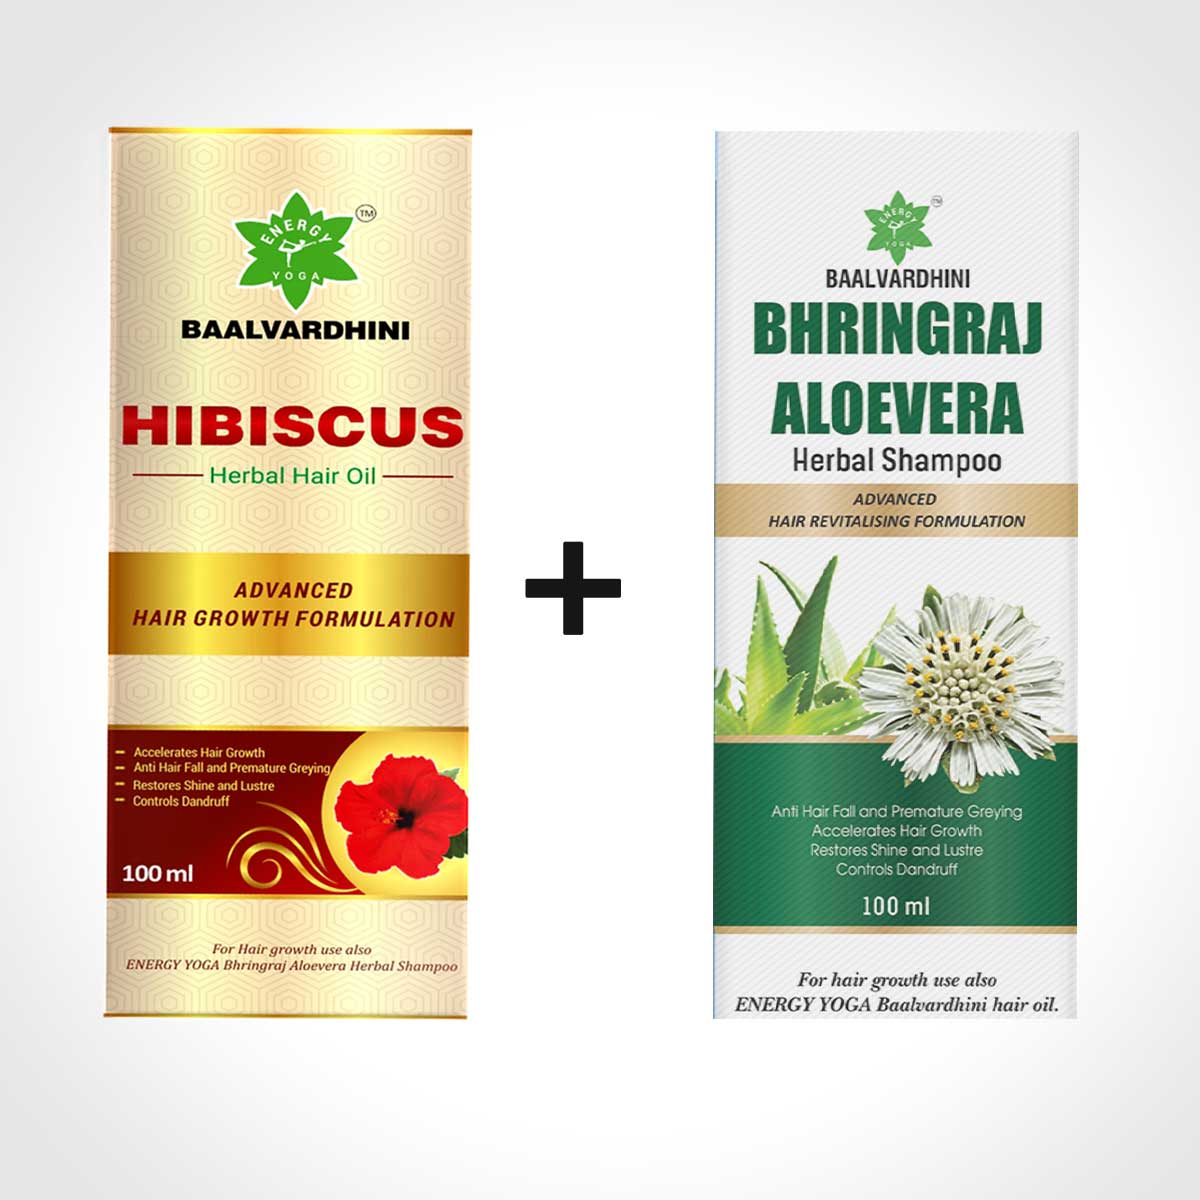 Baalvardhini Hibiscus Herbal Hair Oil & Baalvardhini Bhringraj Aloevera Herbal Shampoo - (Combo Pack)